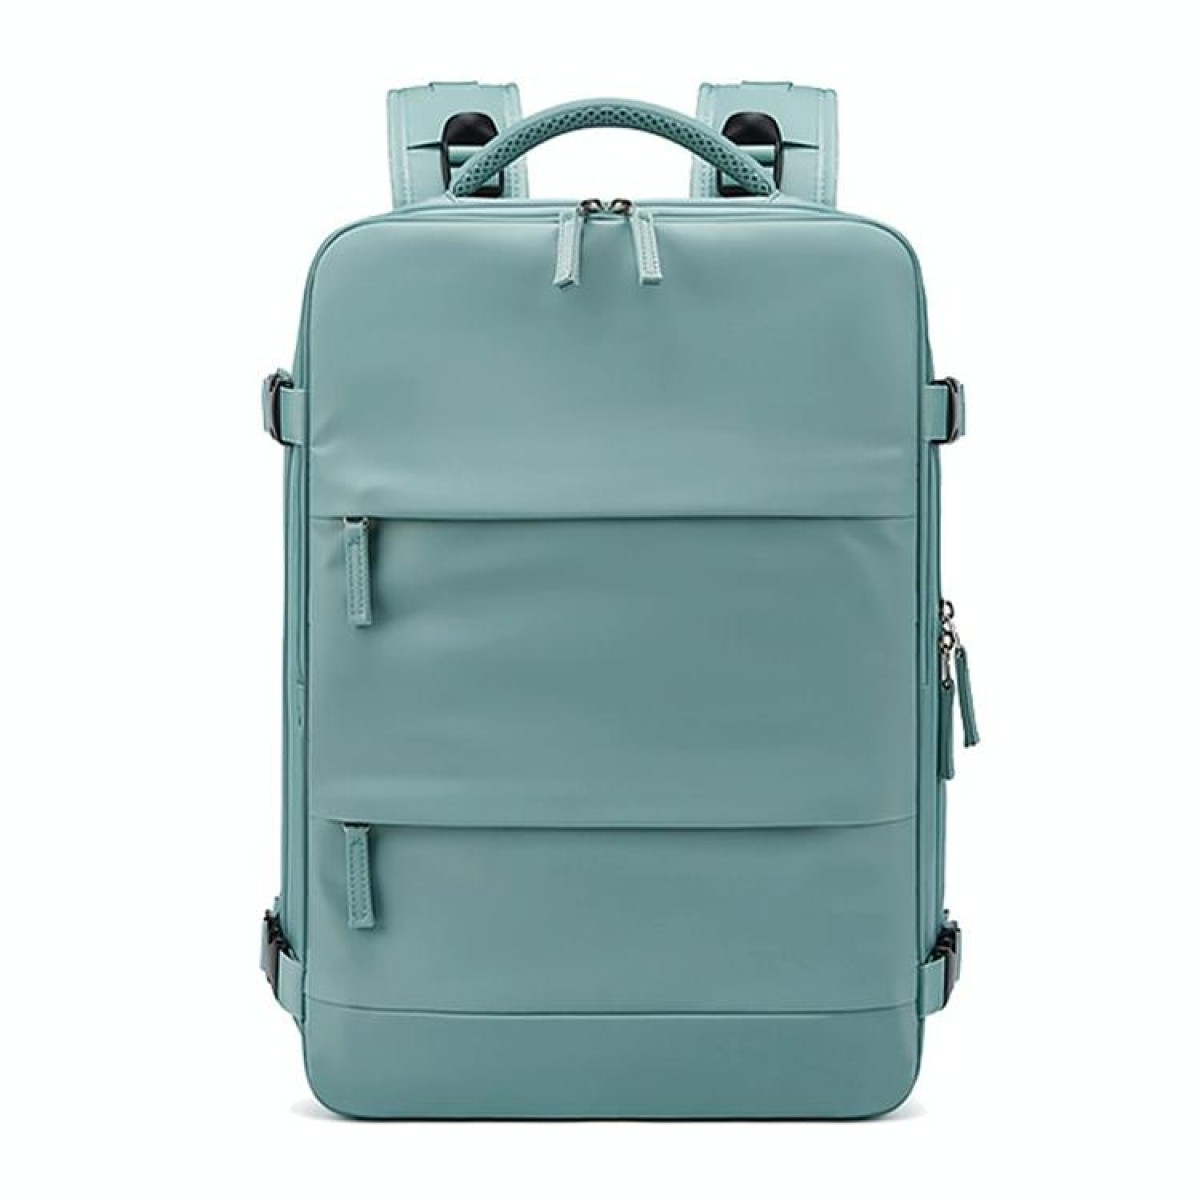 Outdoor Travel Large Capacity Shoulders Bag Laptop Backpack(Green)